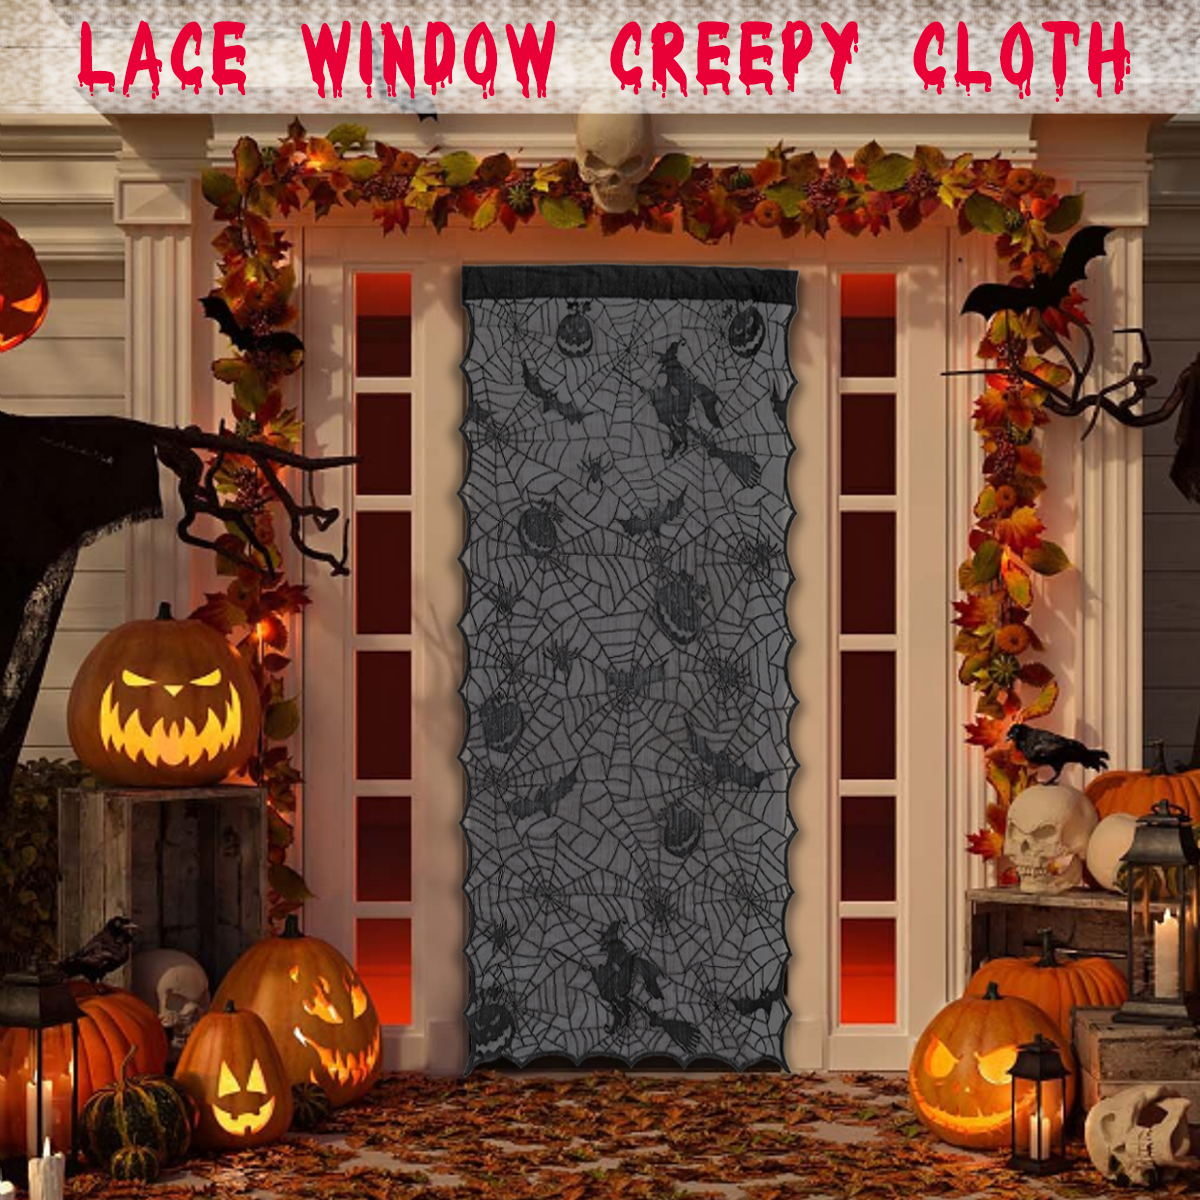 Halloween-Lace-Window-Door-Curtains-Witch-Pumpkins-Bats-Cloth-Haunted-House-Decor-1342883-1